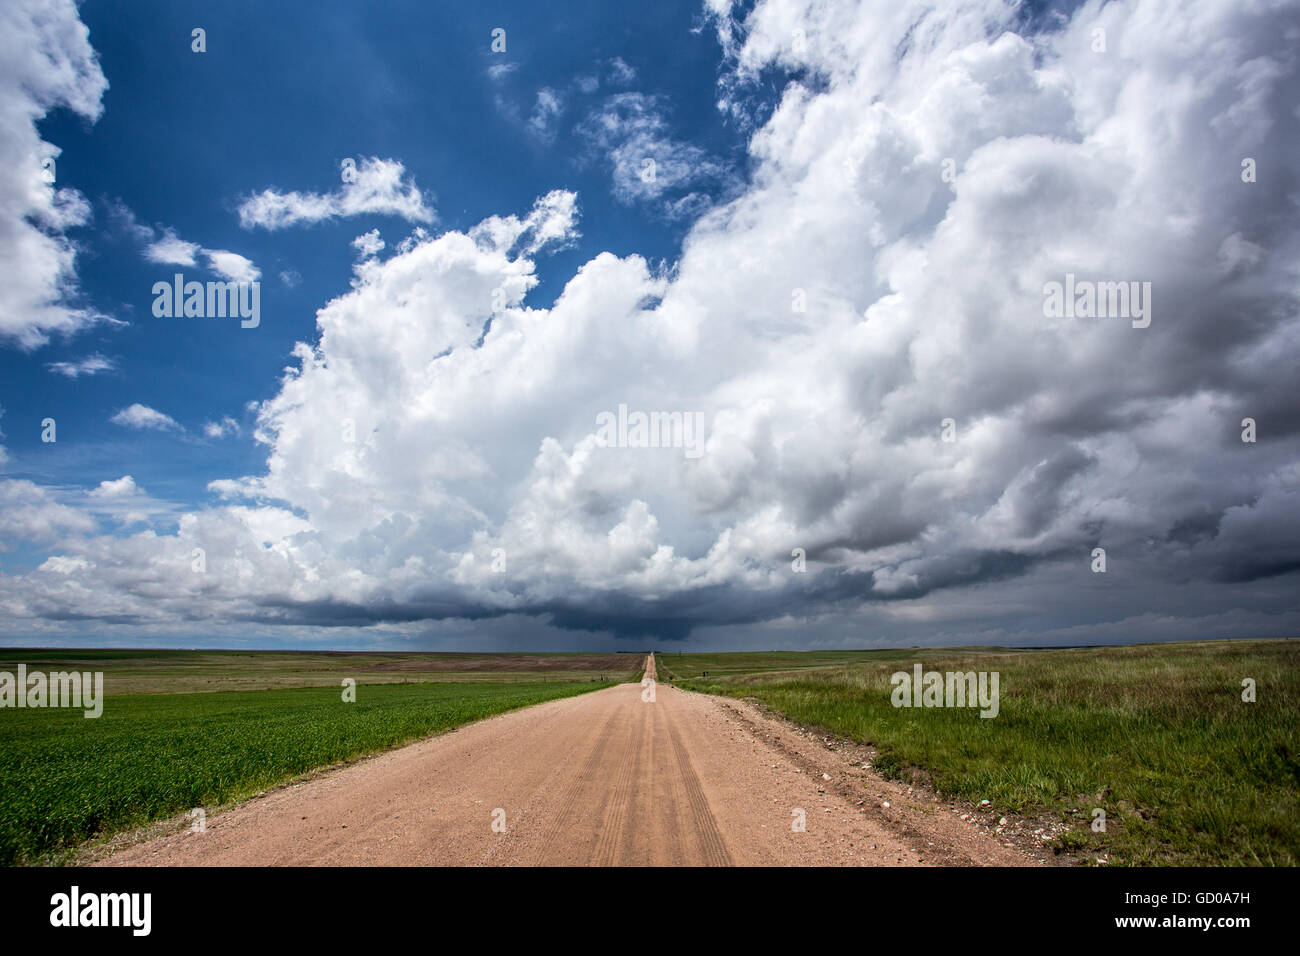 A dirt road leads into a thunderstorm near Yuma, Colorado, May 23, 2015. Stock Photo